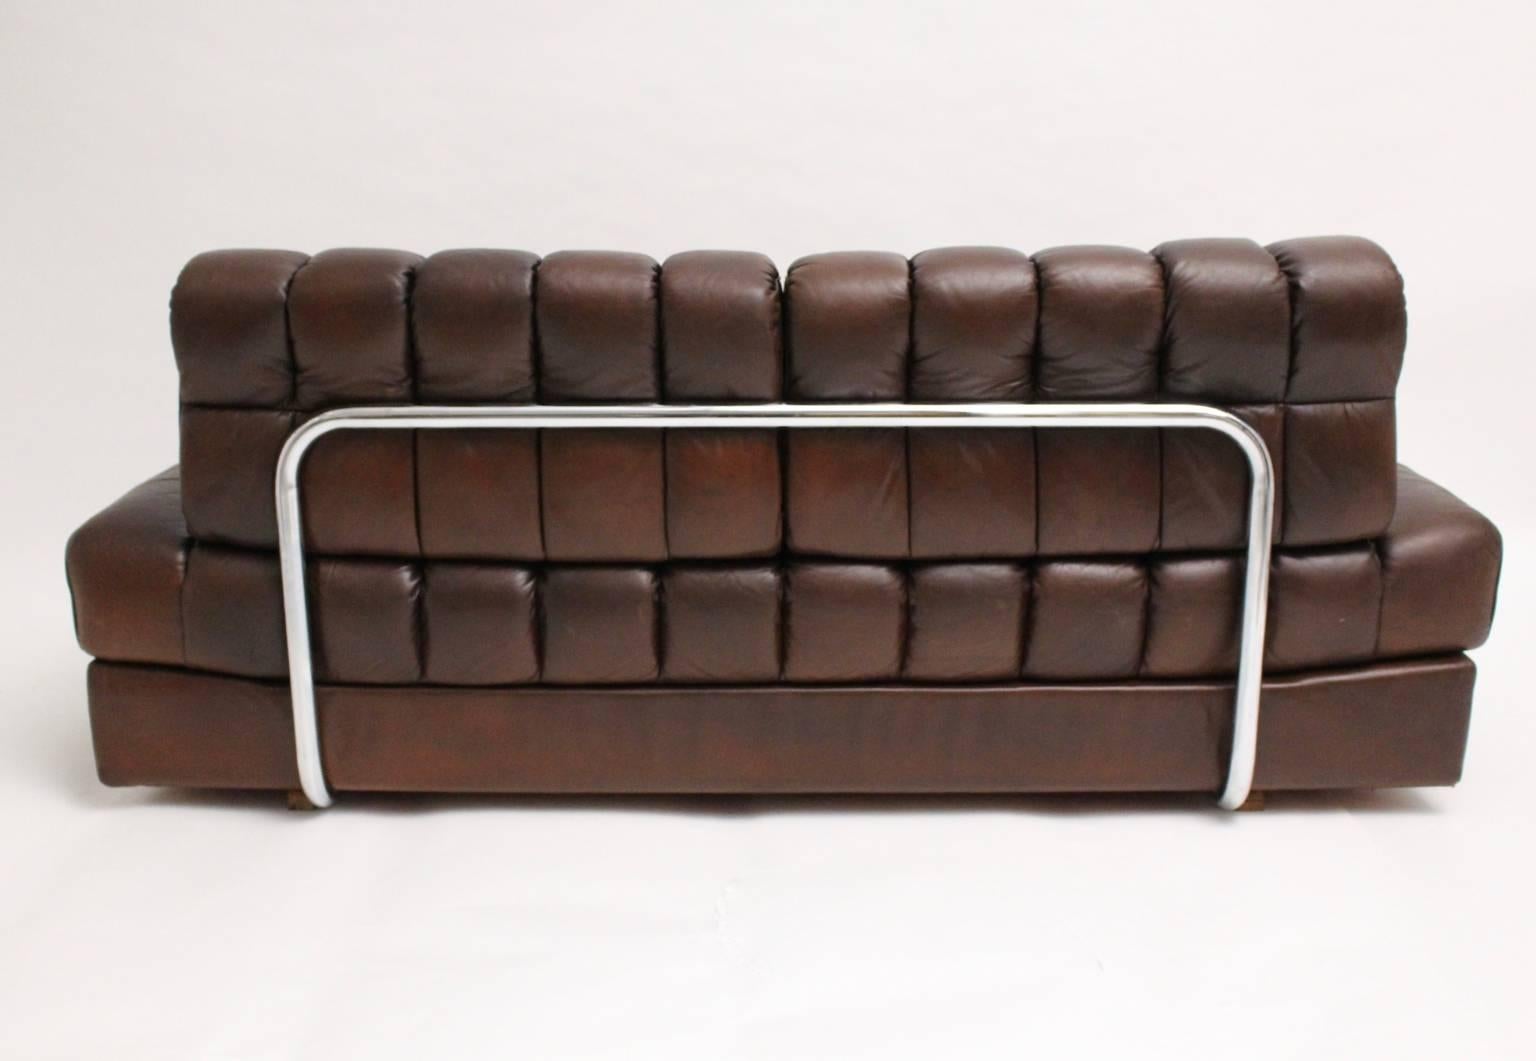 De Sede DS 85 Brown Leather Daybed or Sofa 1970s, Switzerland (Ende des 20. Jahrhunderts)